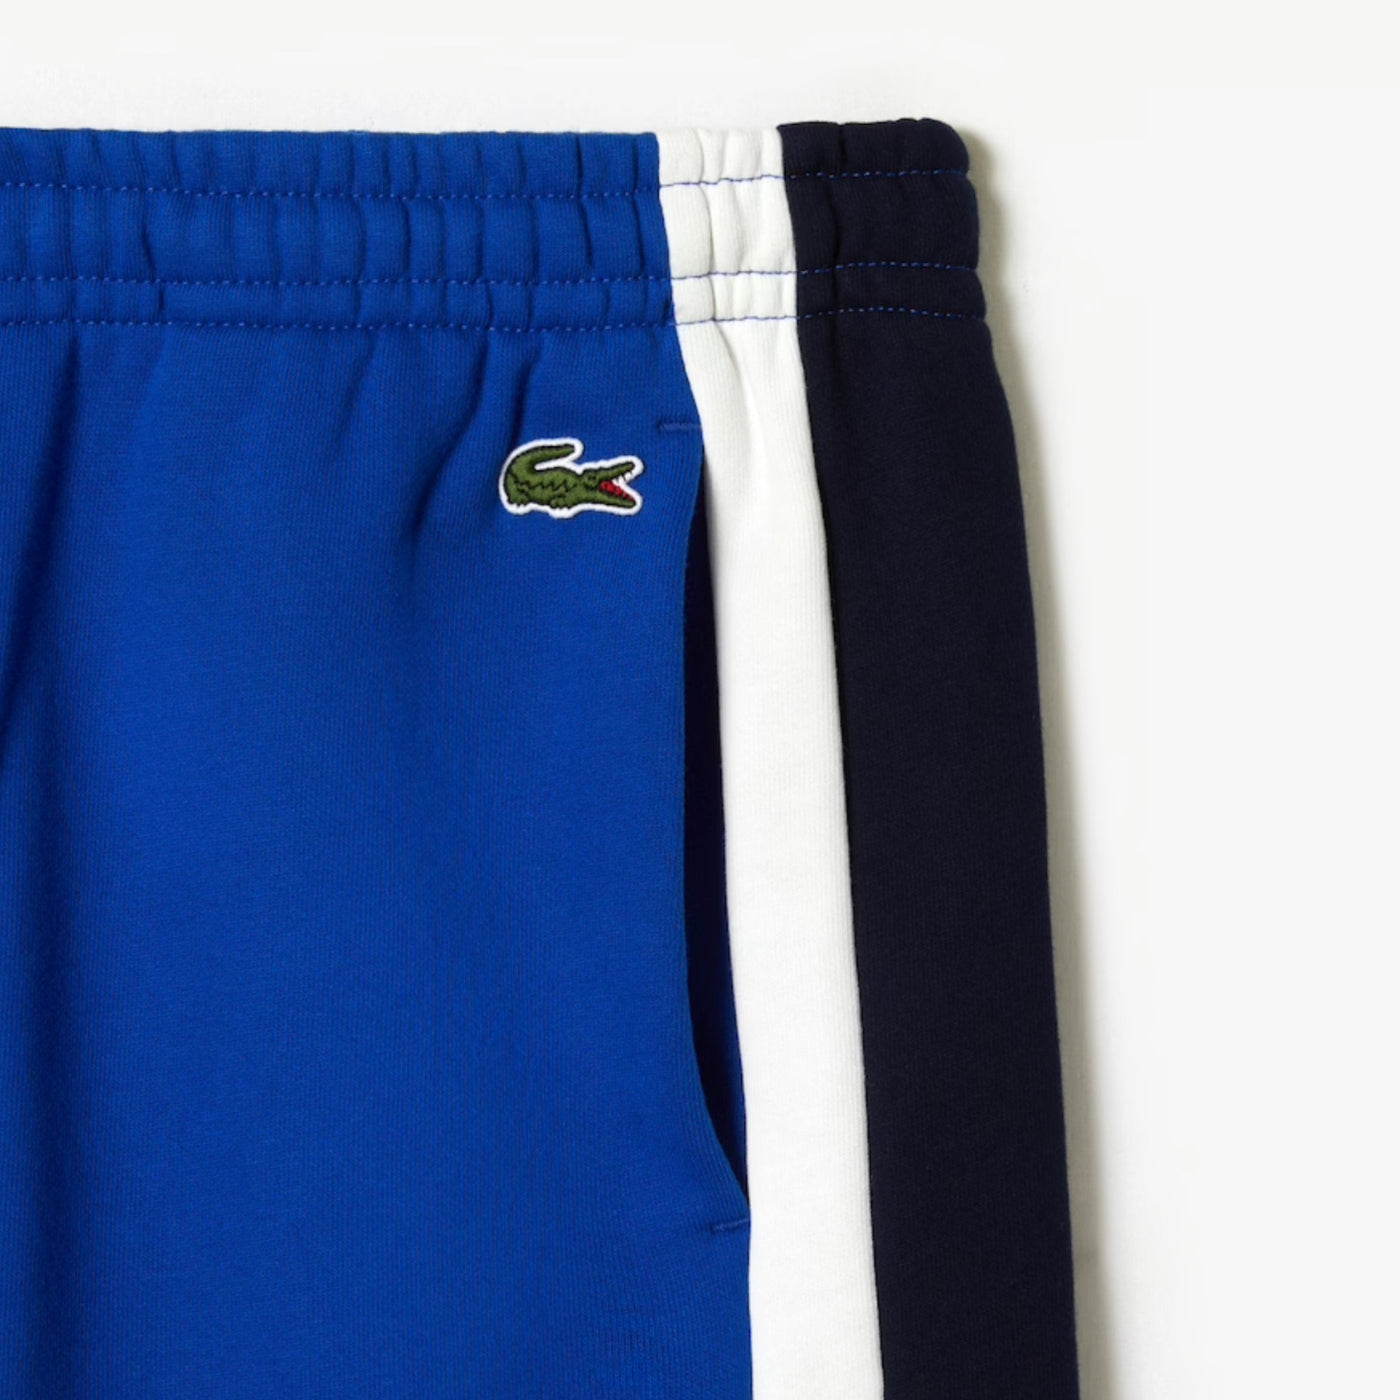 Men’s Brushed Fleece Colorblock Shorts (Blue)